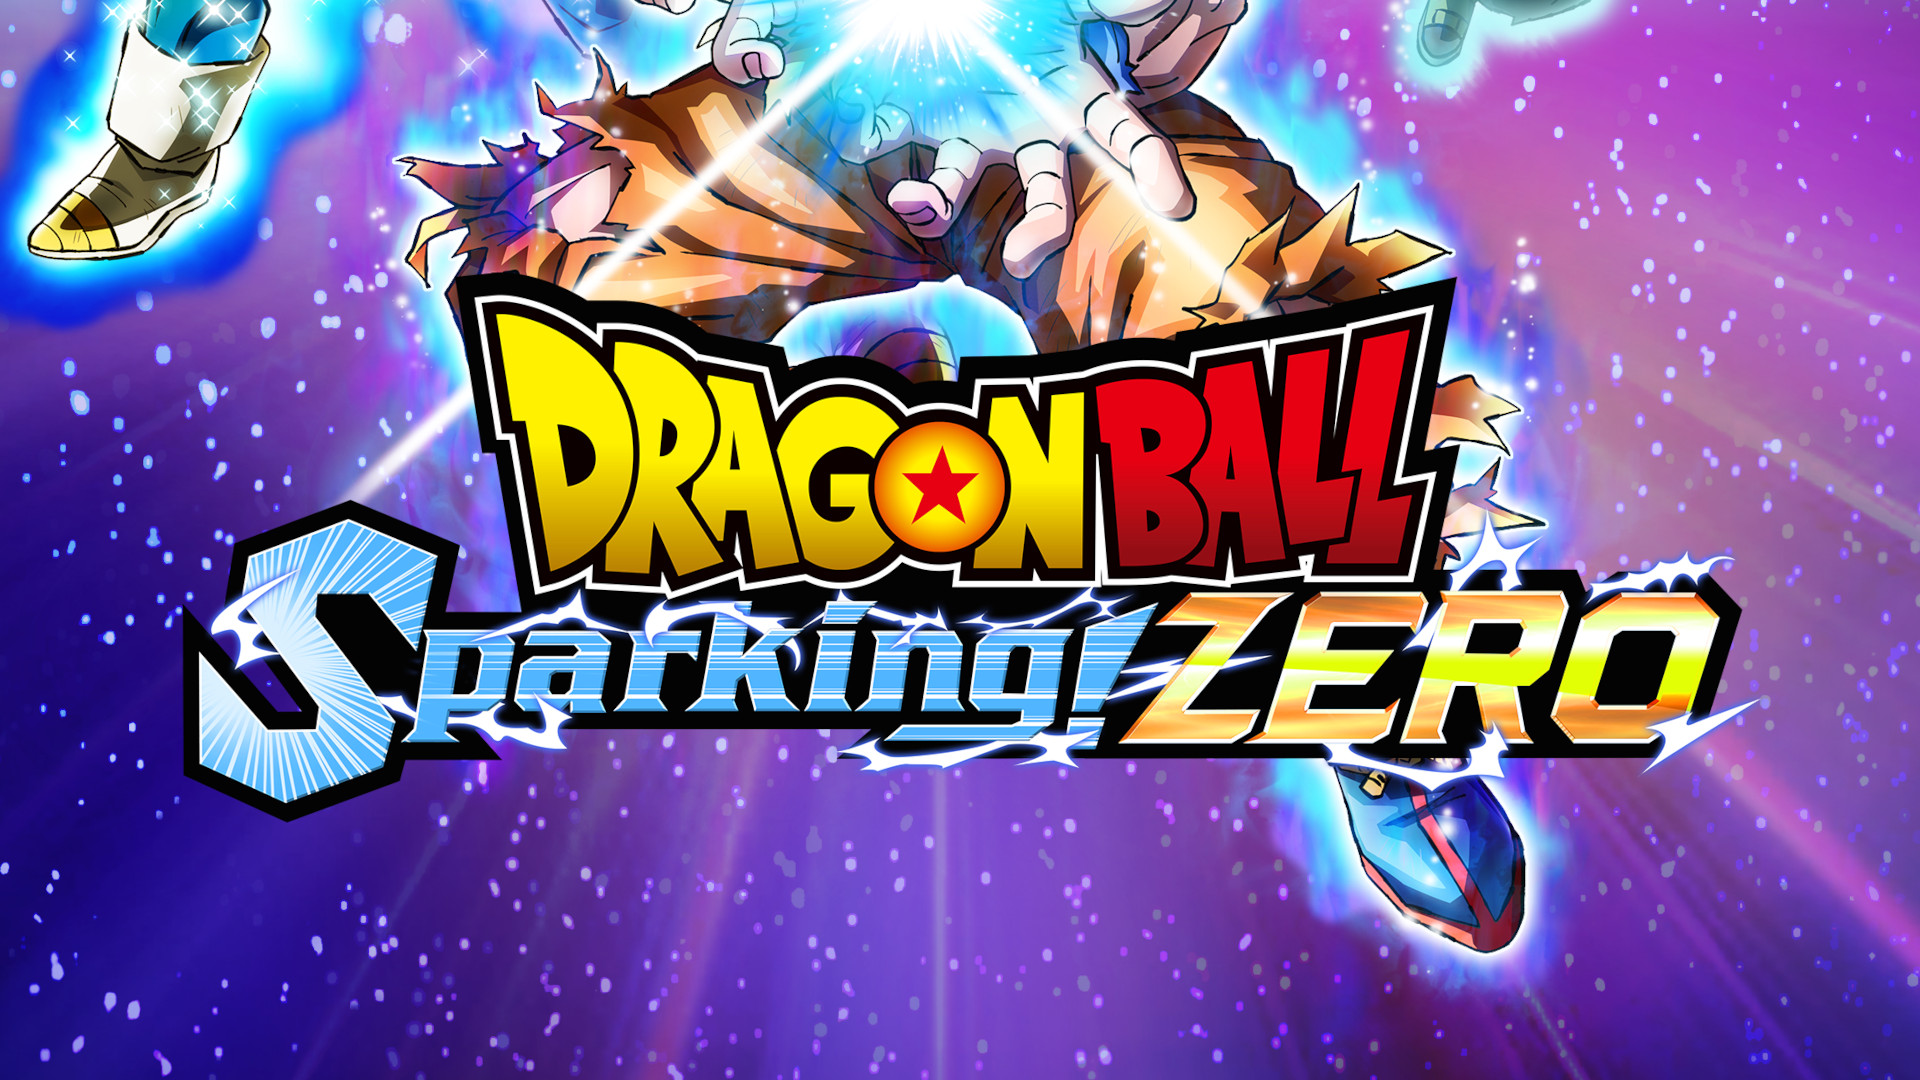 DRAGON BALL: Sparking! ZERO Logo and Keyart